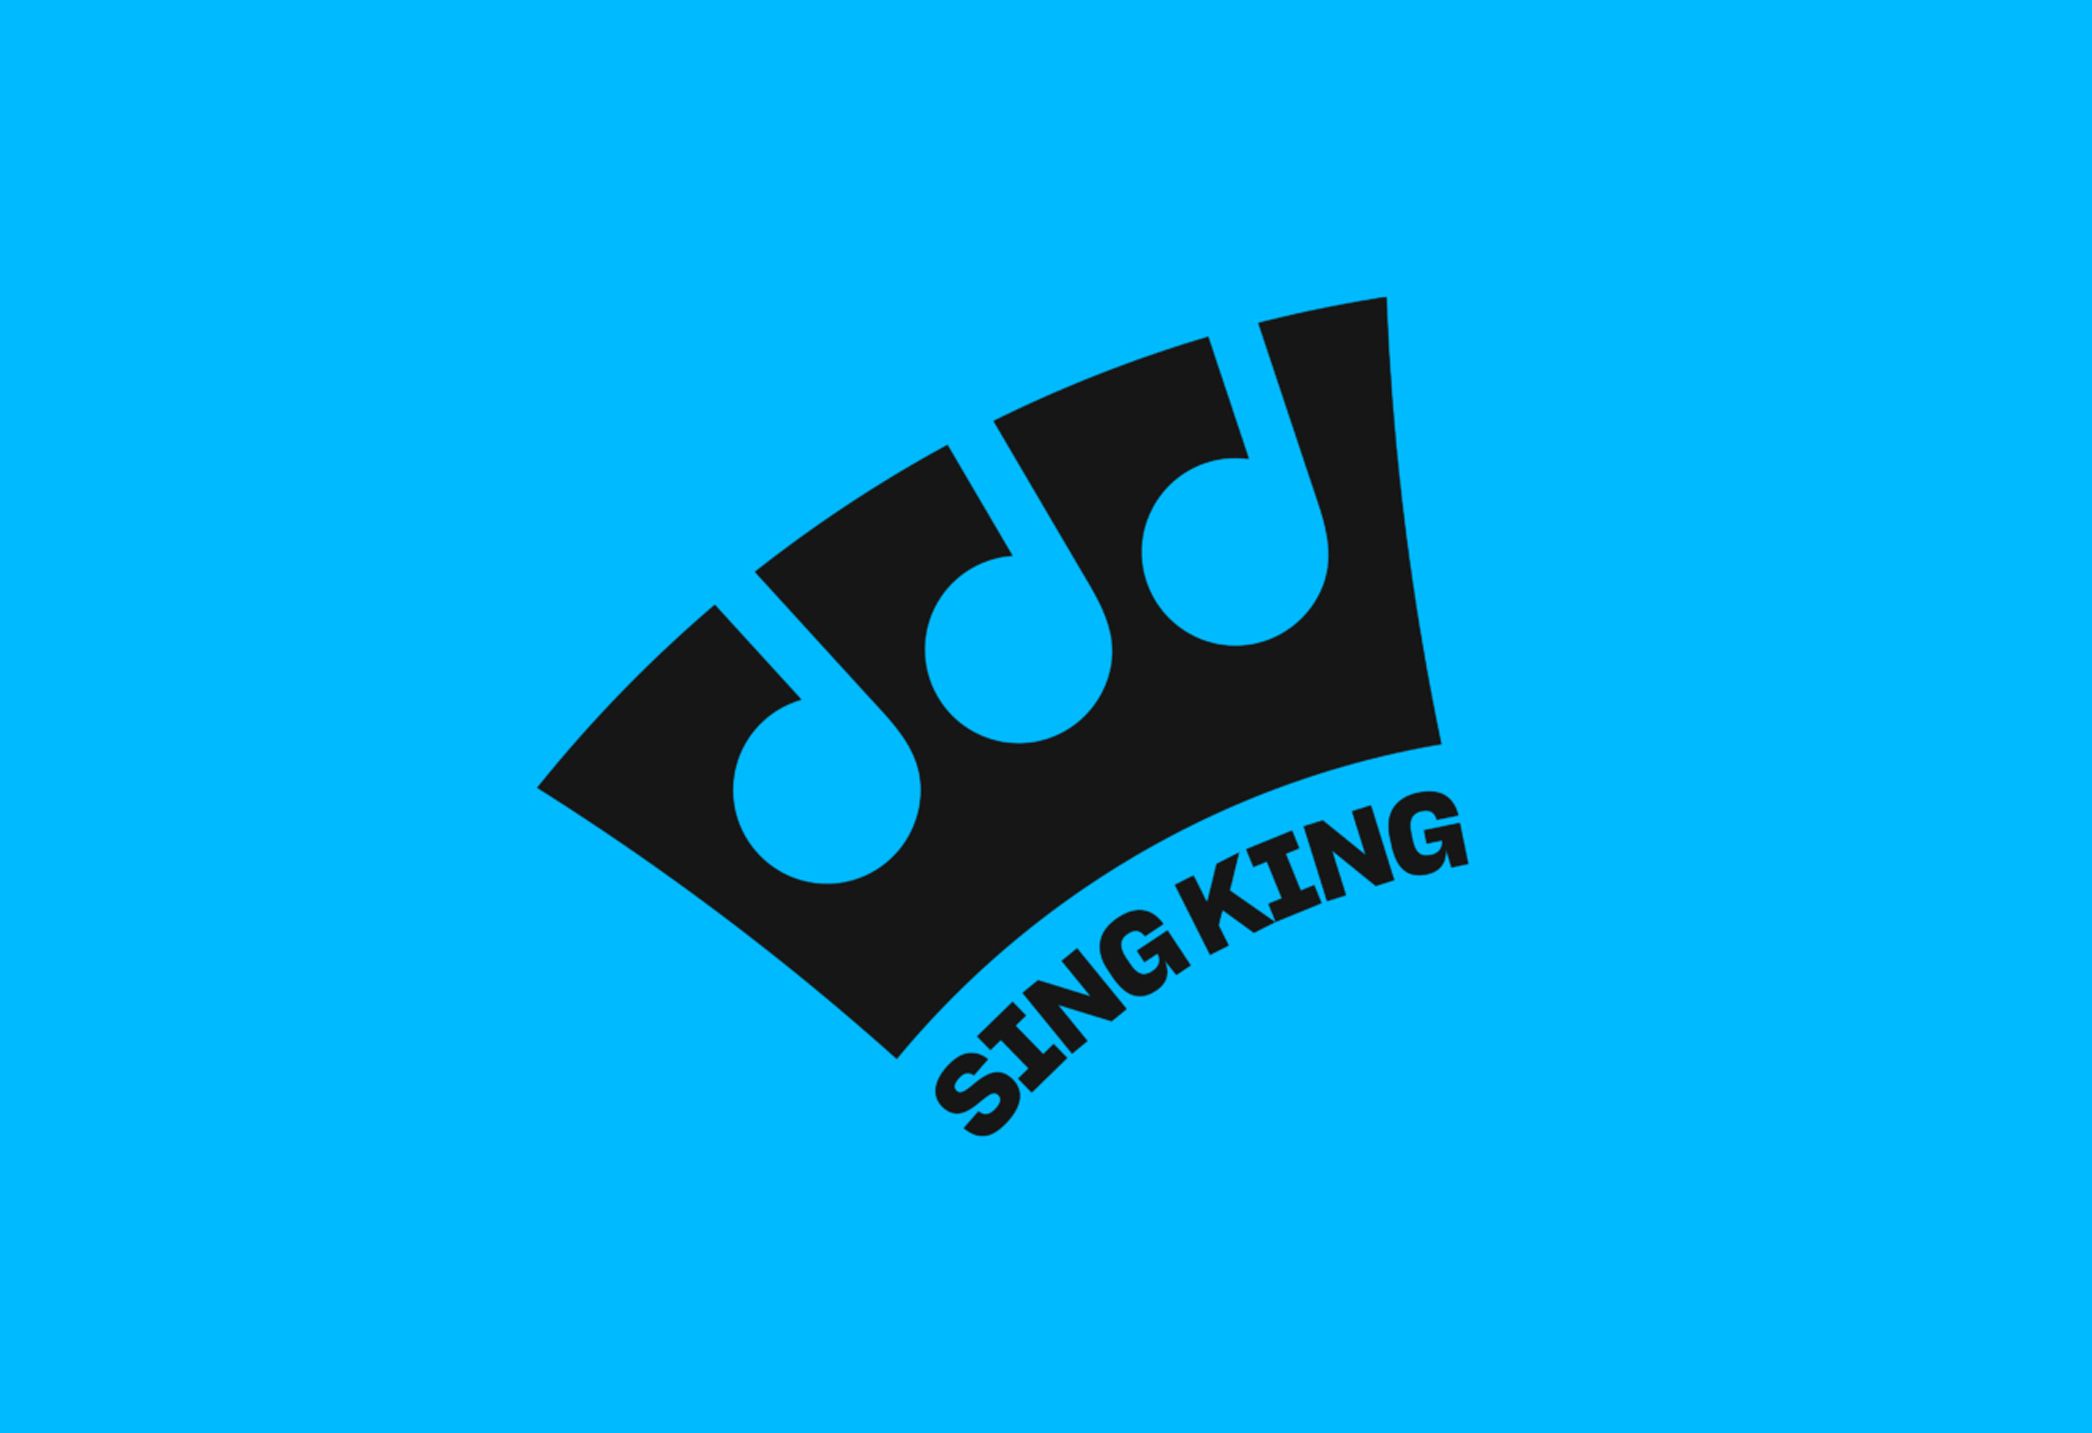 Logo for karaoke brand Sing King designed by London-based Nomad